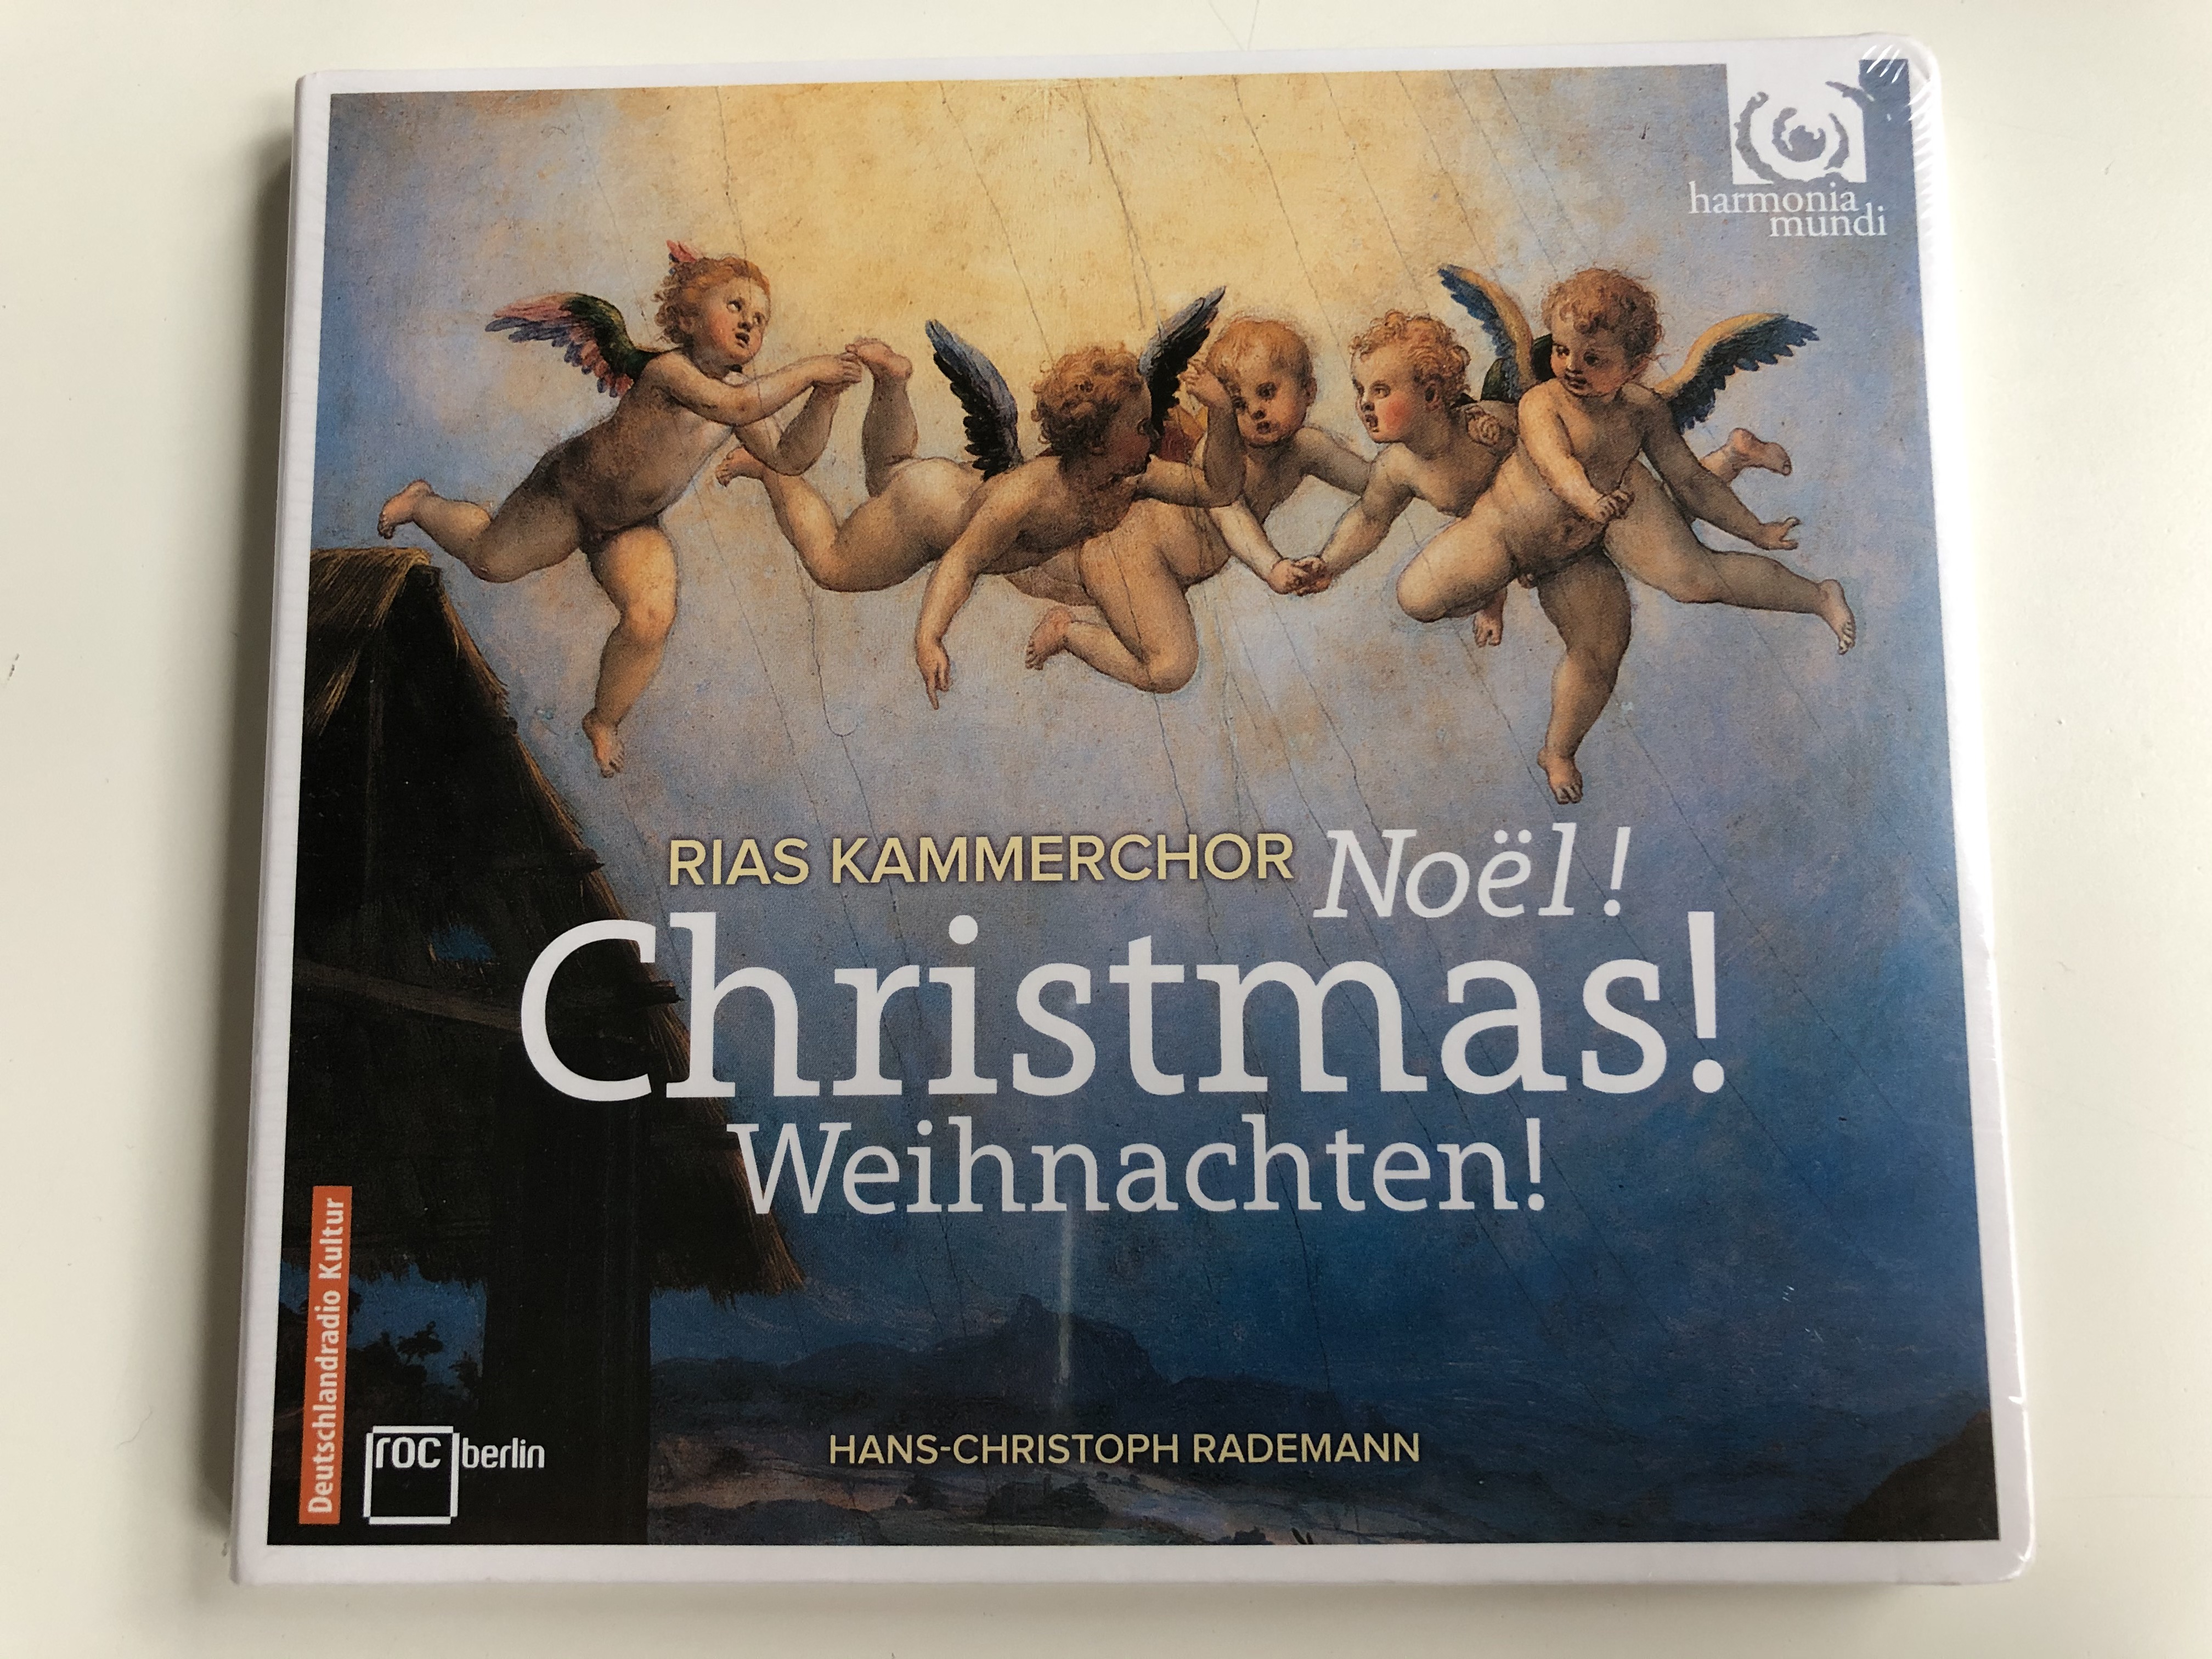 rias-kammerchor-no-l-christmas-weihnachten-hans-christoph-rademann-harmonia-mundi-audio-cd-2013-hmc-902170-1-.jpg